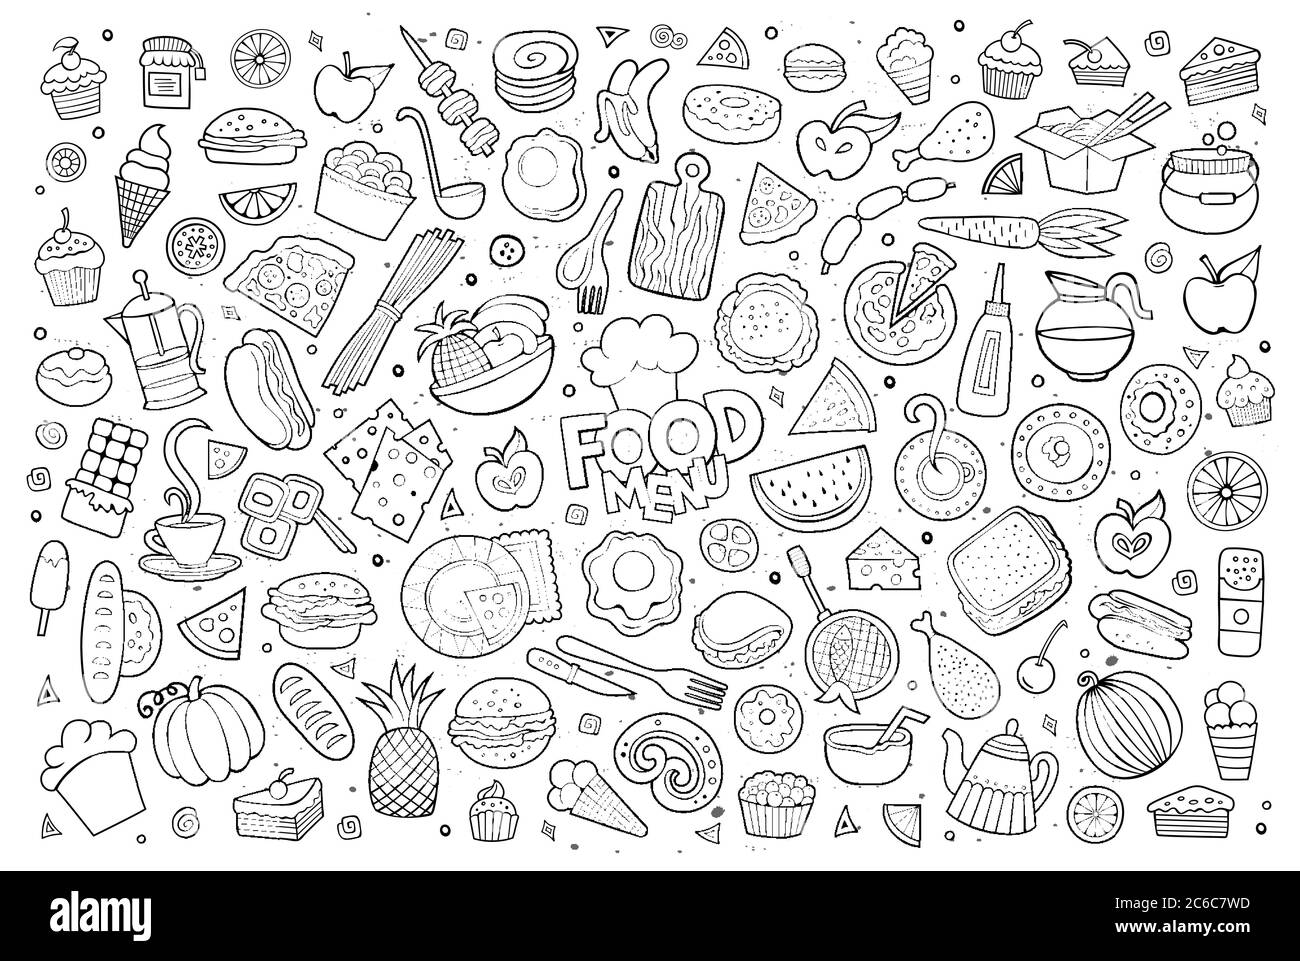 Lebensmittel doodles Hand gezeichnet skizzenhafte Vektor-Symbole Stock Vektor